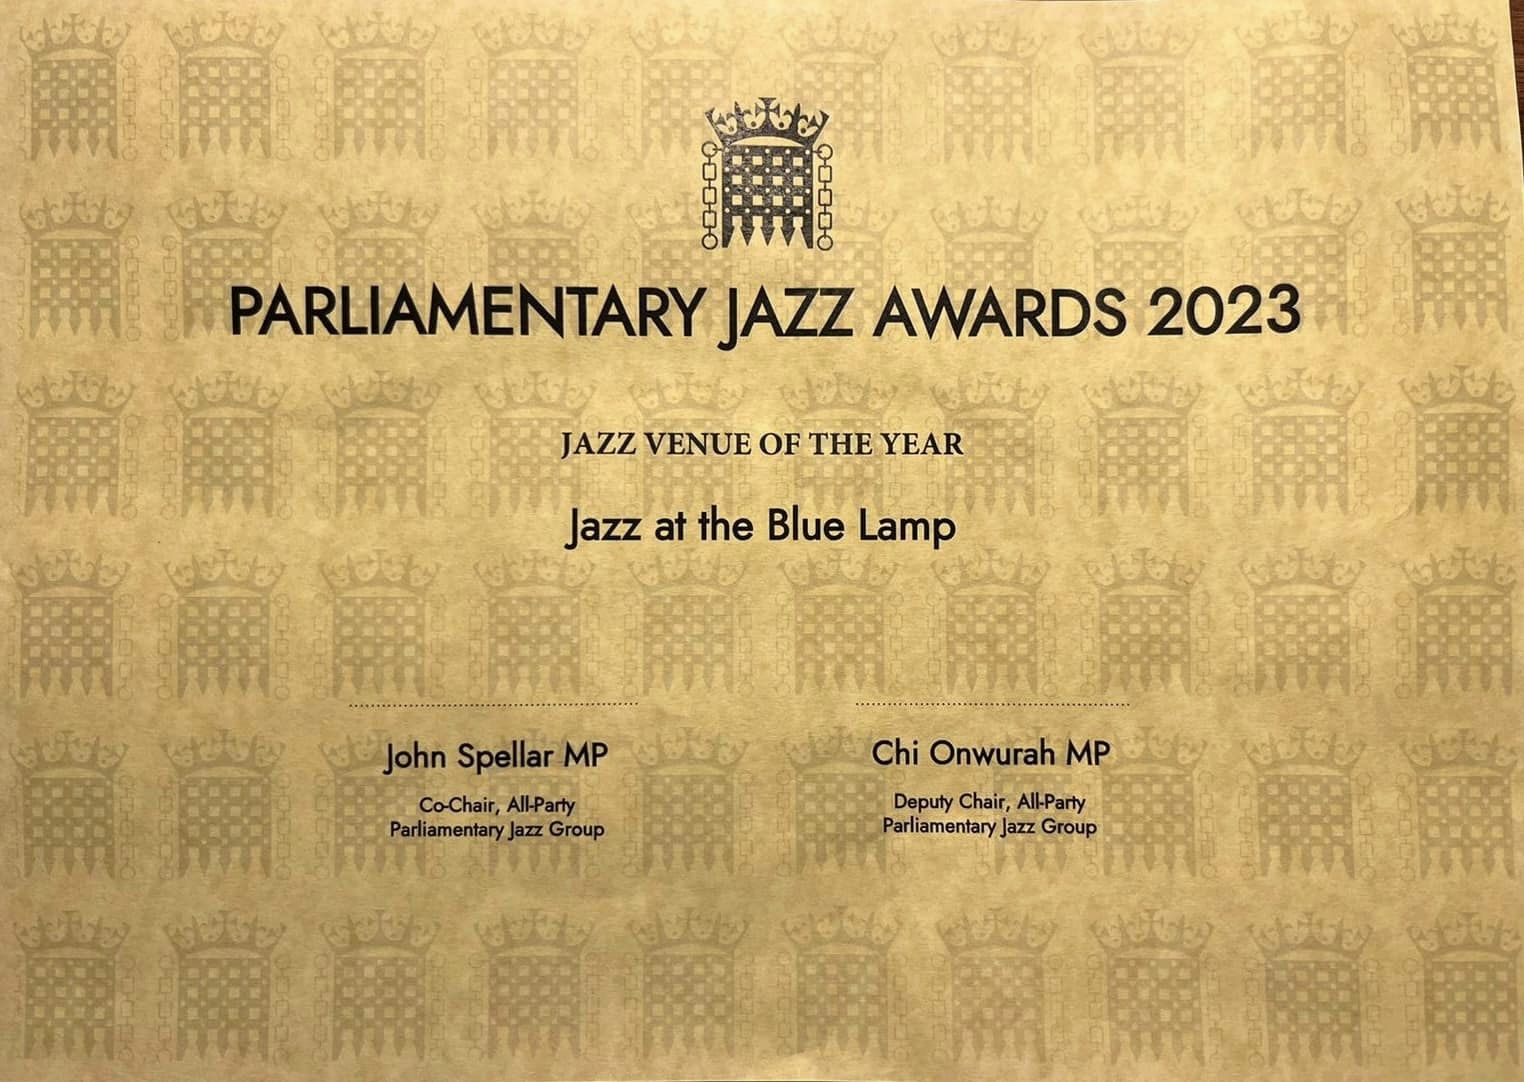 Jazz at the Blue Lamp wins 2023 Parliamentary Jazz Award